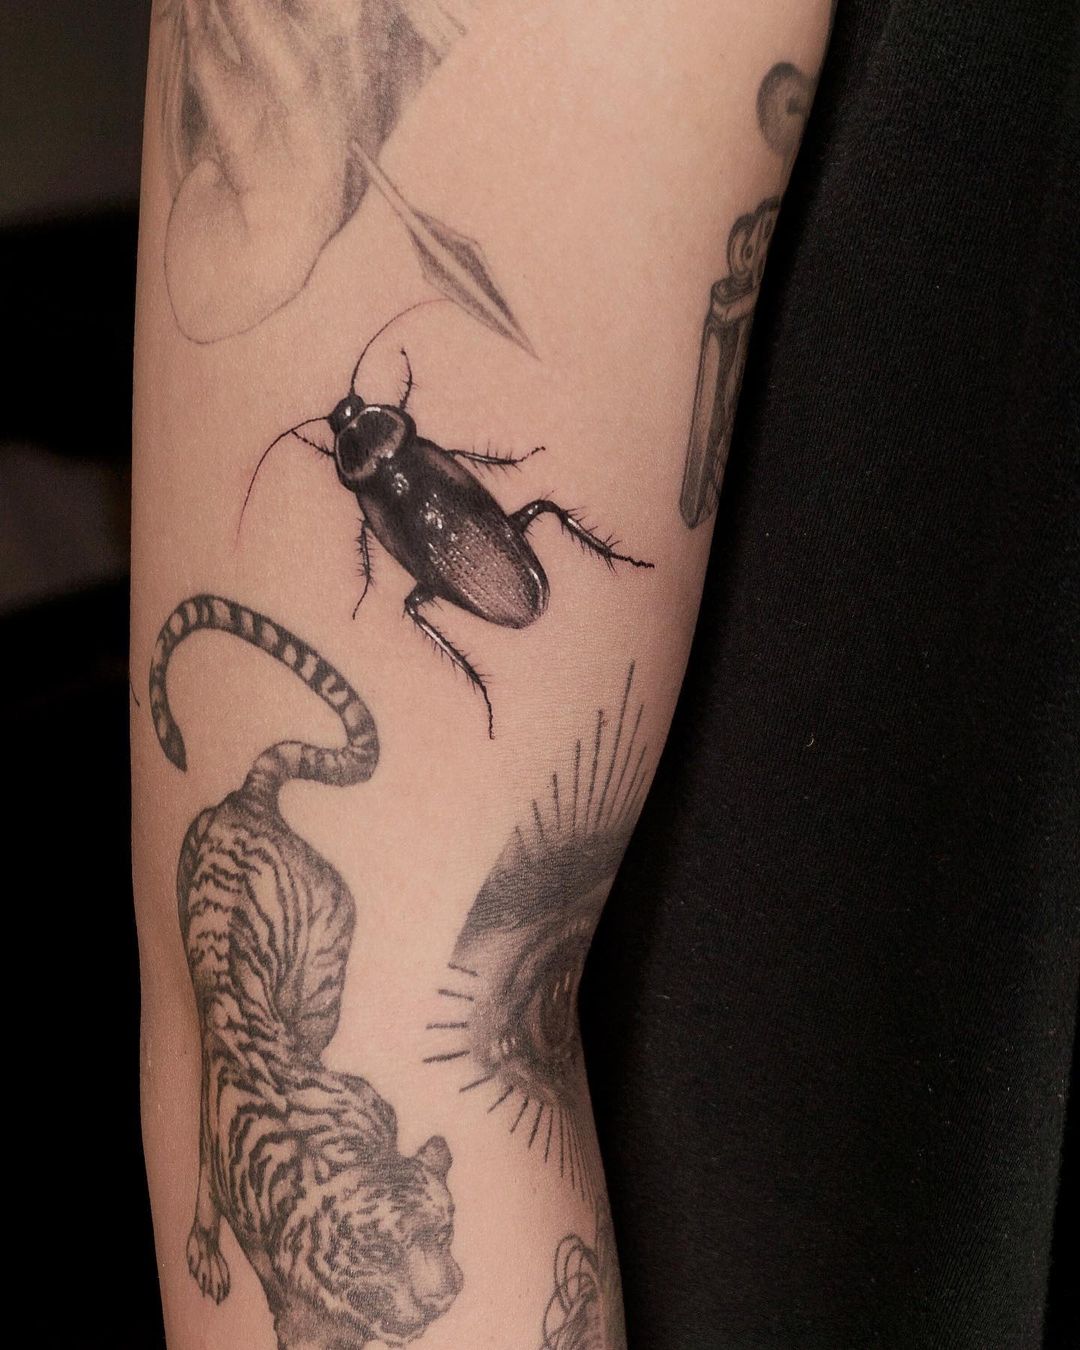 Cockroach tattoo by ladyboitattooer